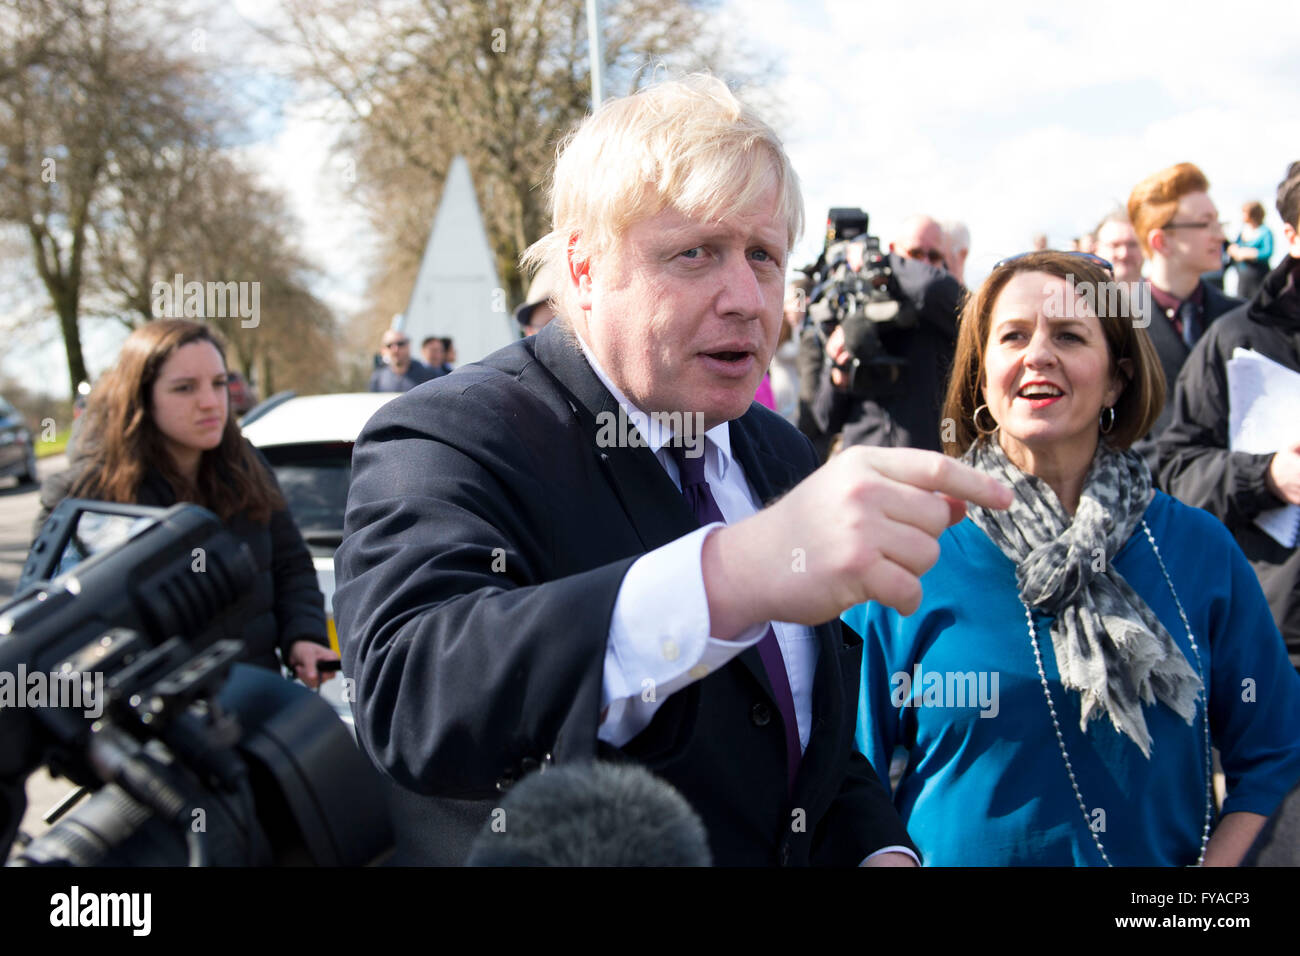 Boris Johnson MP Conservative Foreign Secretary Stock Photo